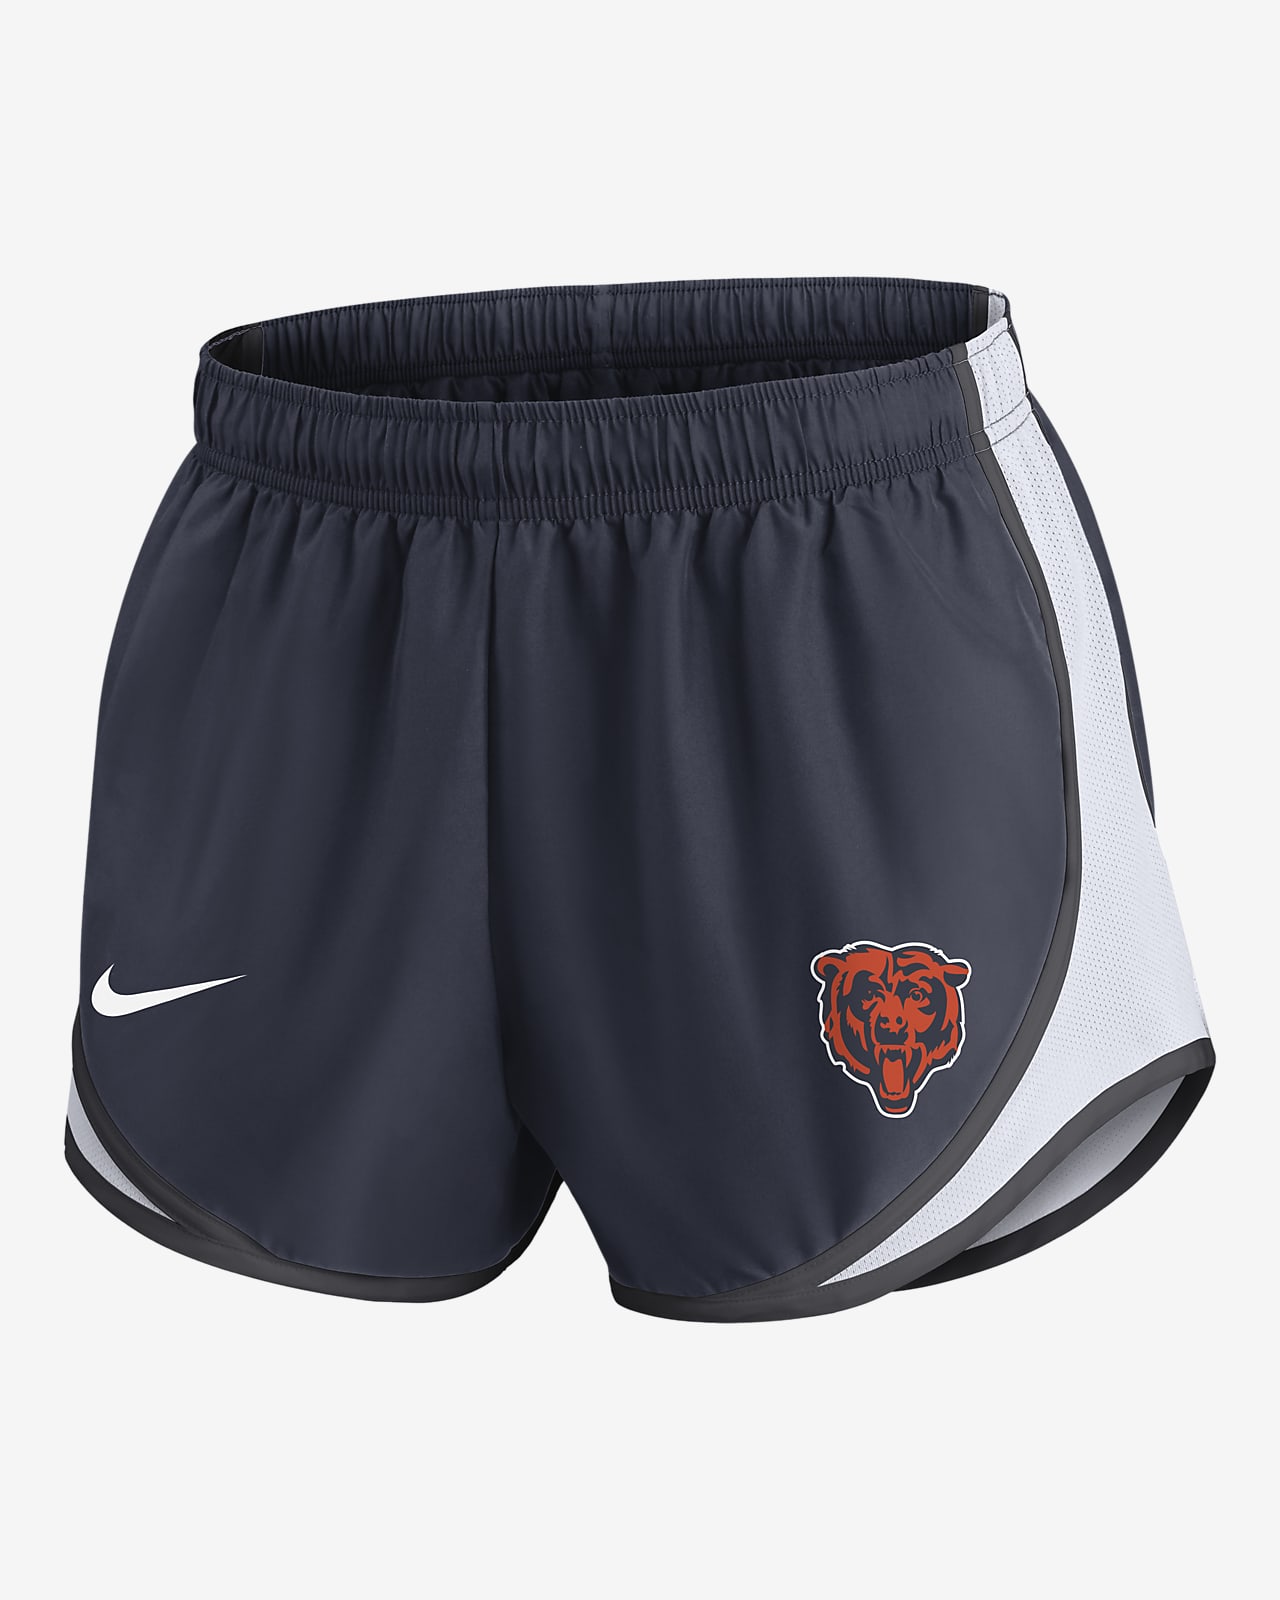 Shorts para mujer Nike Dri-FIT Tempo (NFL Chicago Bears)